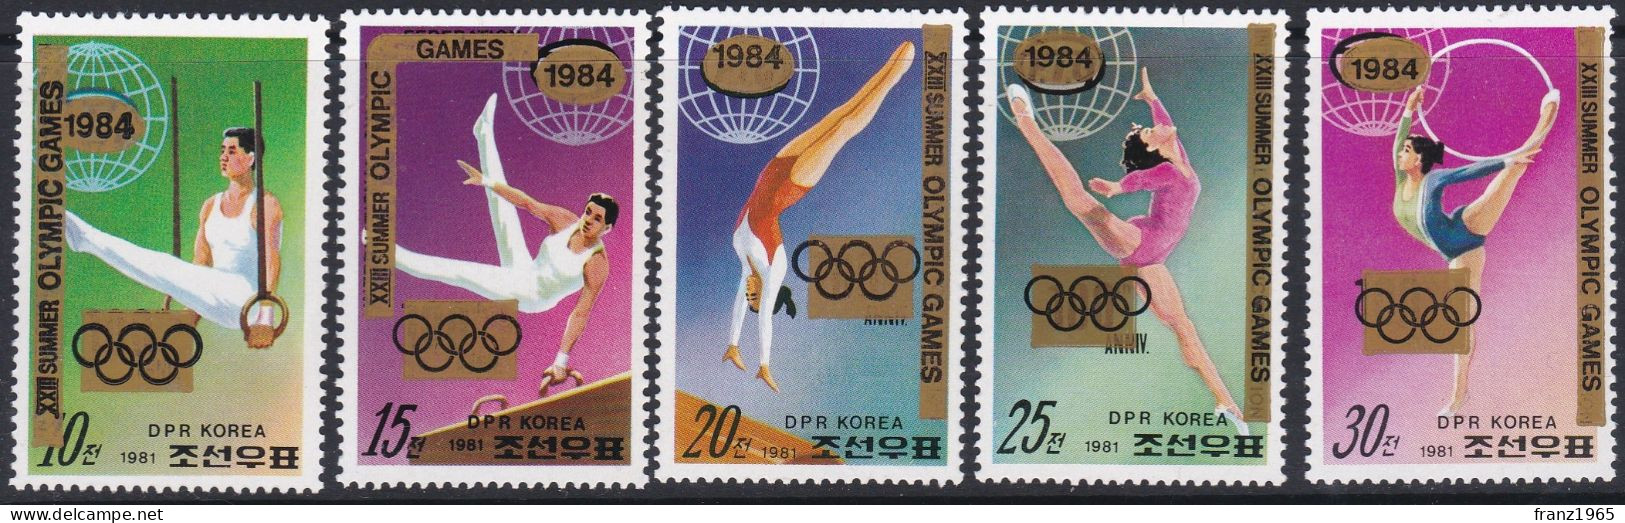 DPR Korea, Olympics Games Los Angeles 1984 - Ginnastica